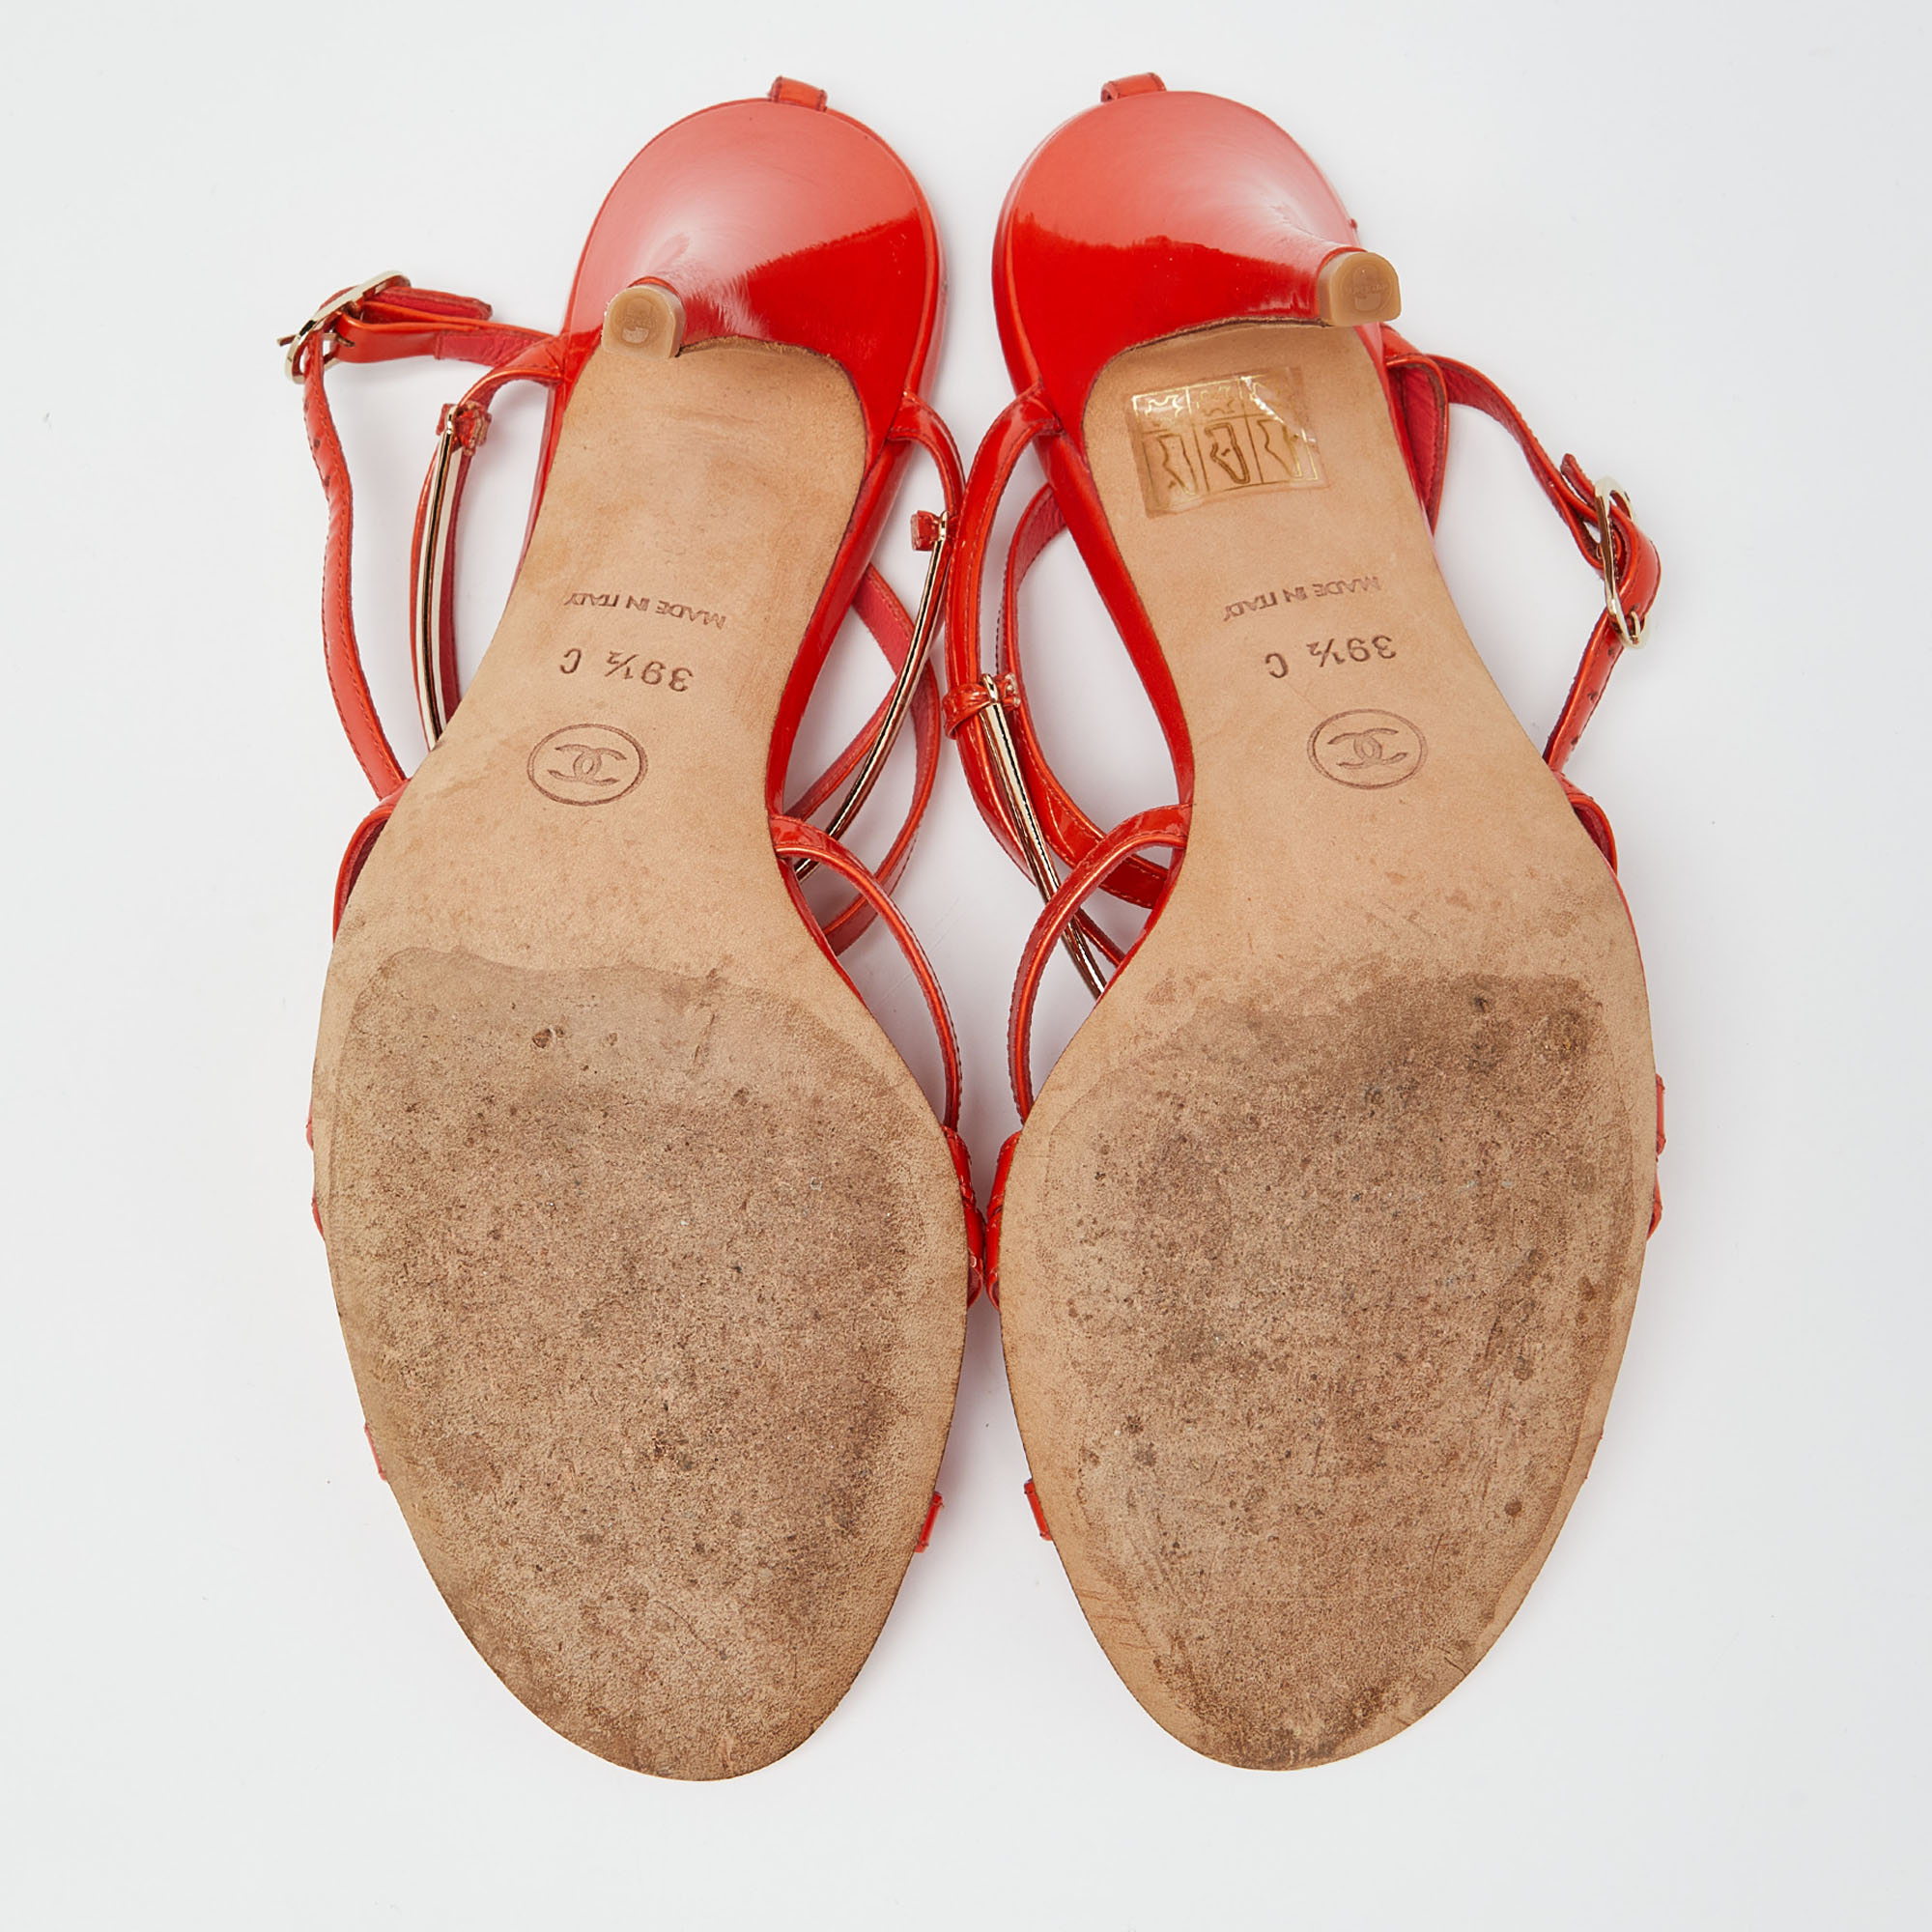 Chanel Orange Patent Ankle Strap Sandals Size 39.5